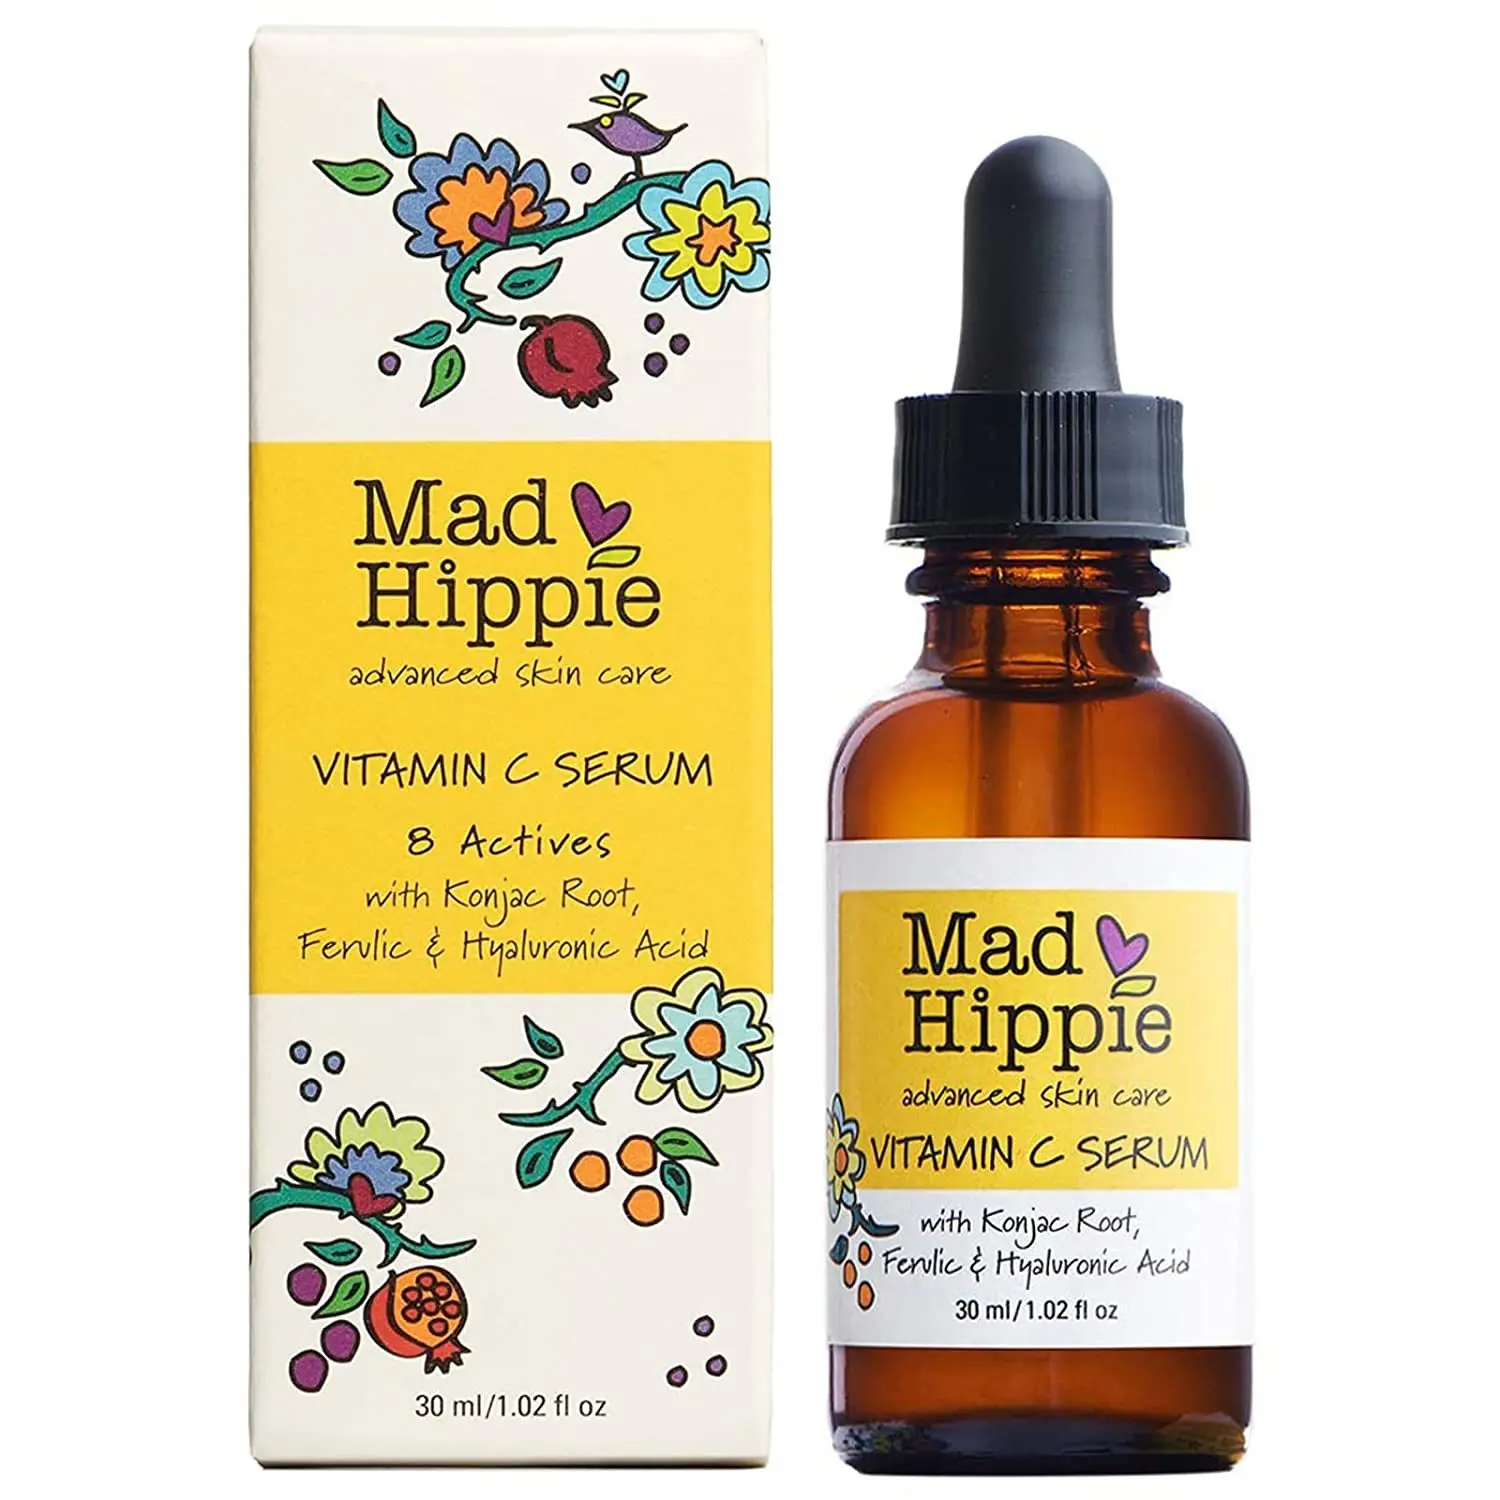 

Mad Hippie Vitamin C Facial Serum Whitening Brighten Essence Melanin Inhibition antioxidant Anti-aging Skin Care 30ml